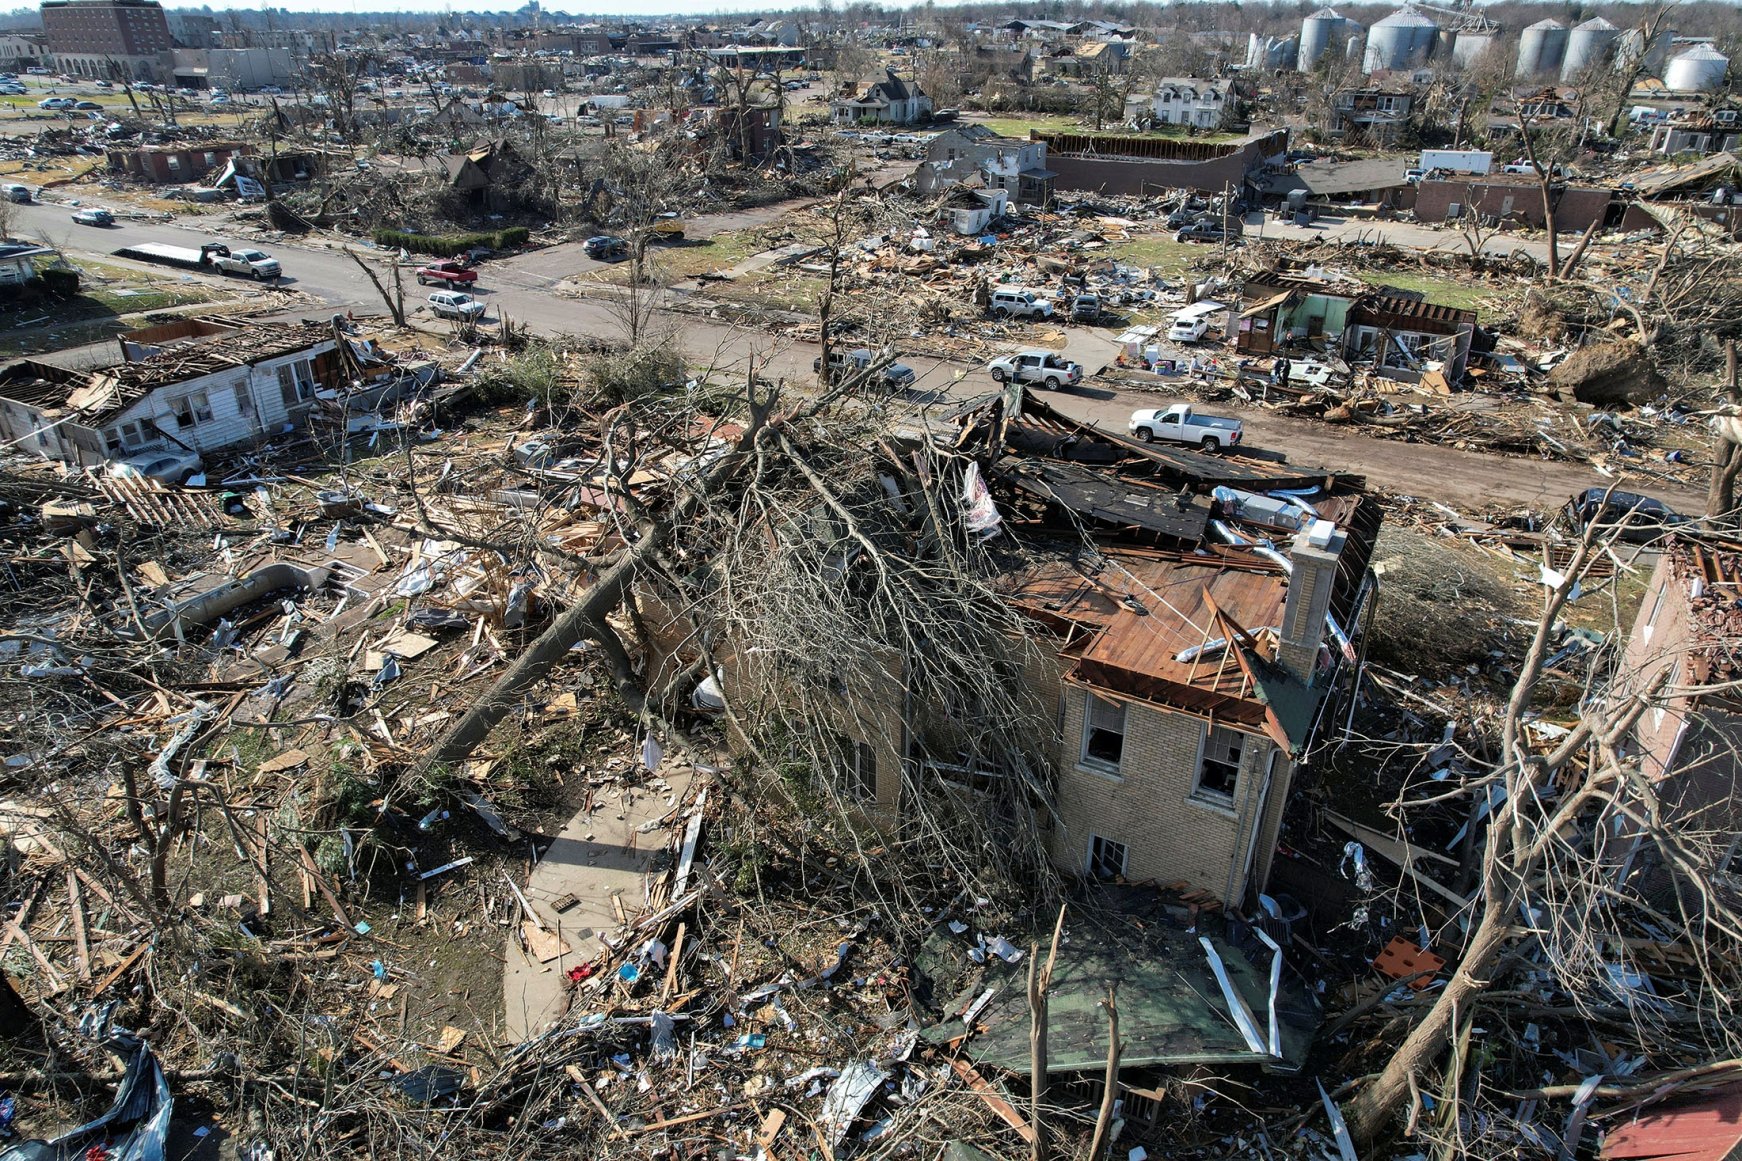 In Photos: Deadly tornados ravage US states, leaving devastation behind